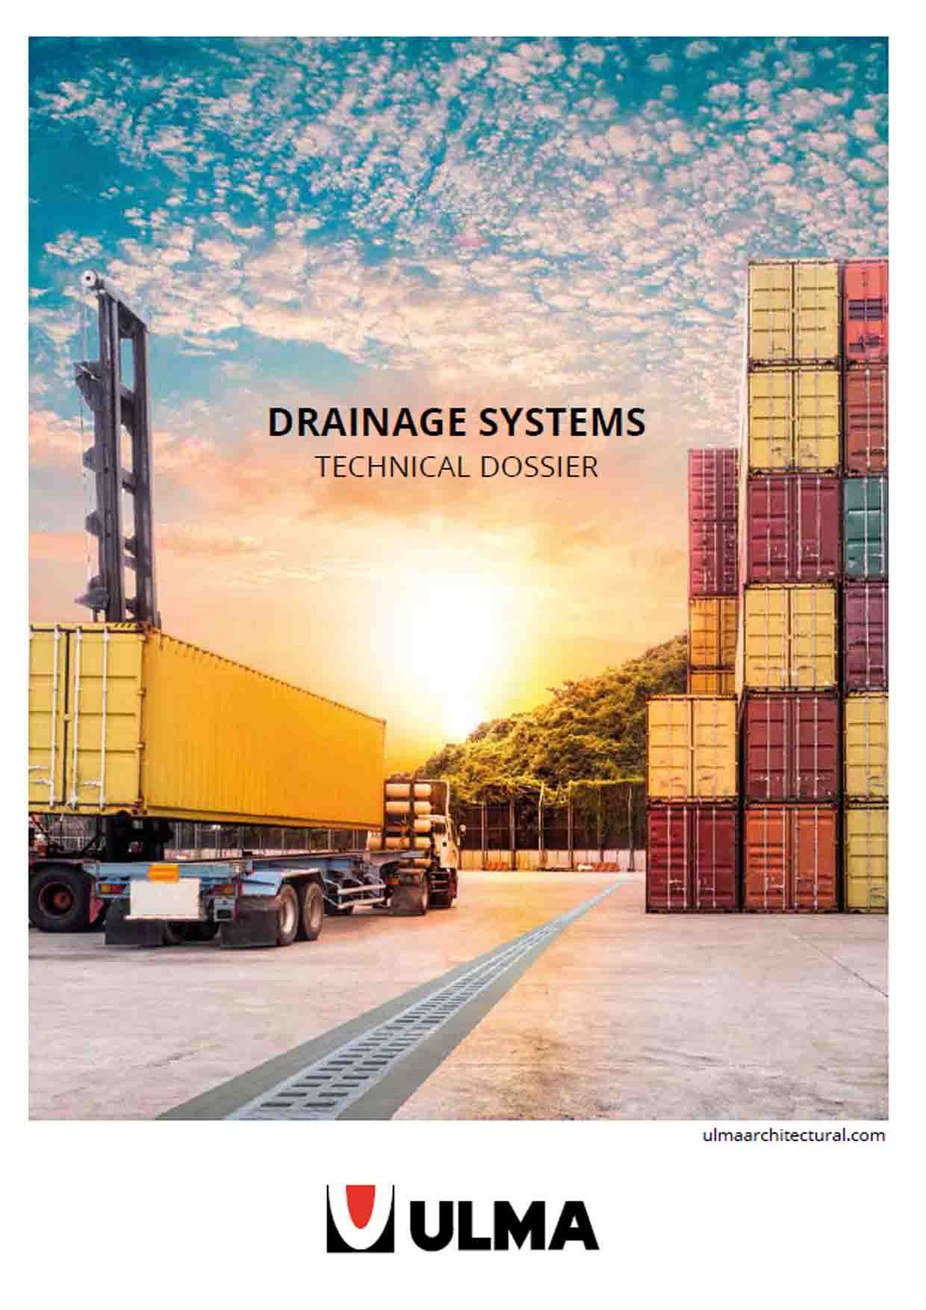 Technical Catalogue